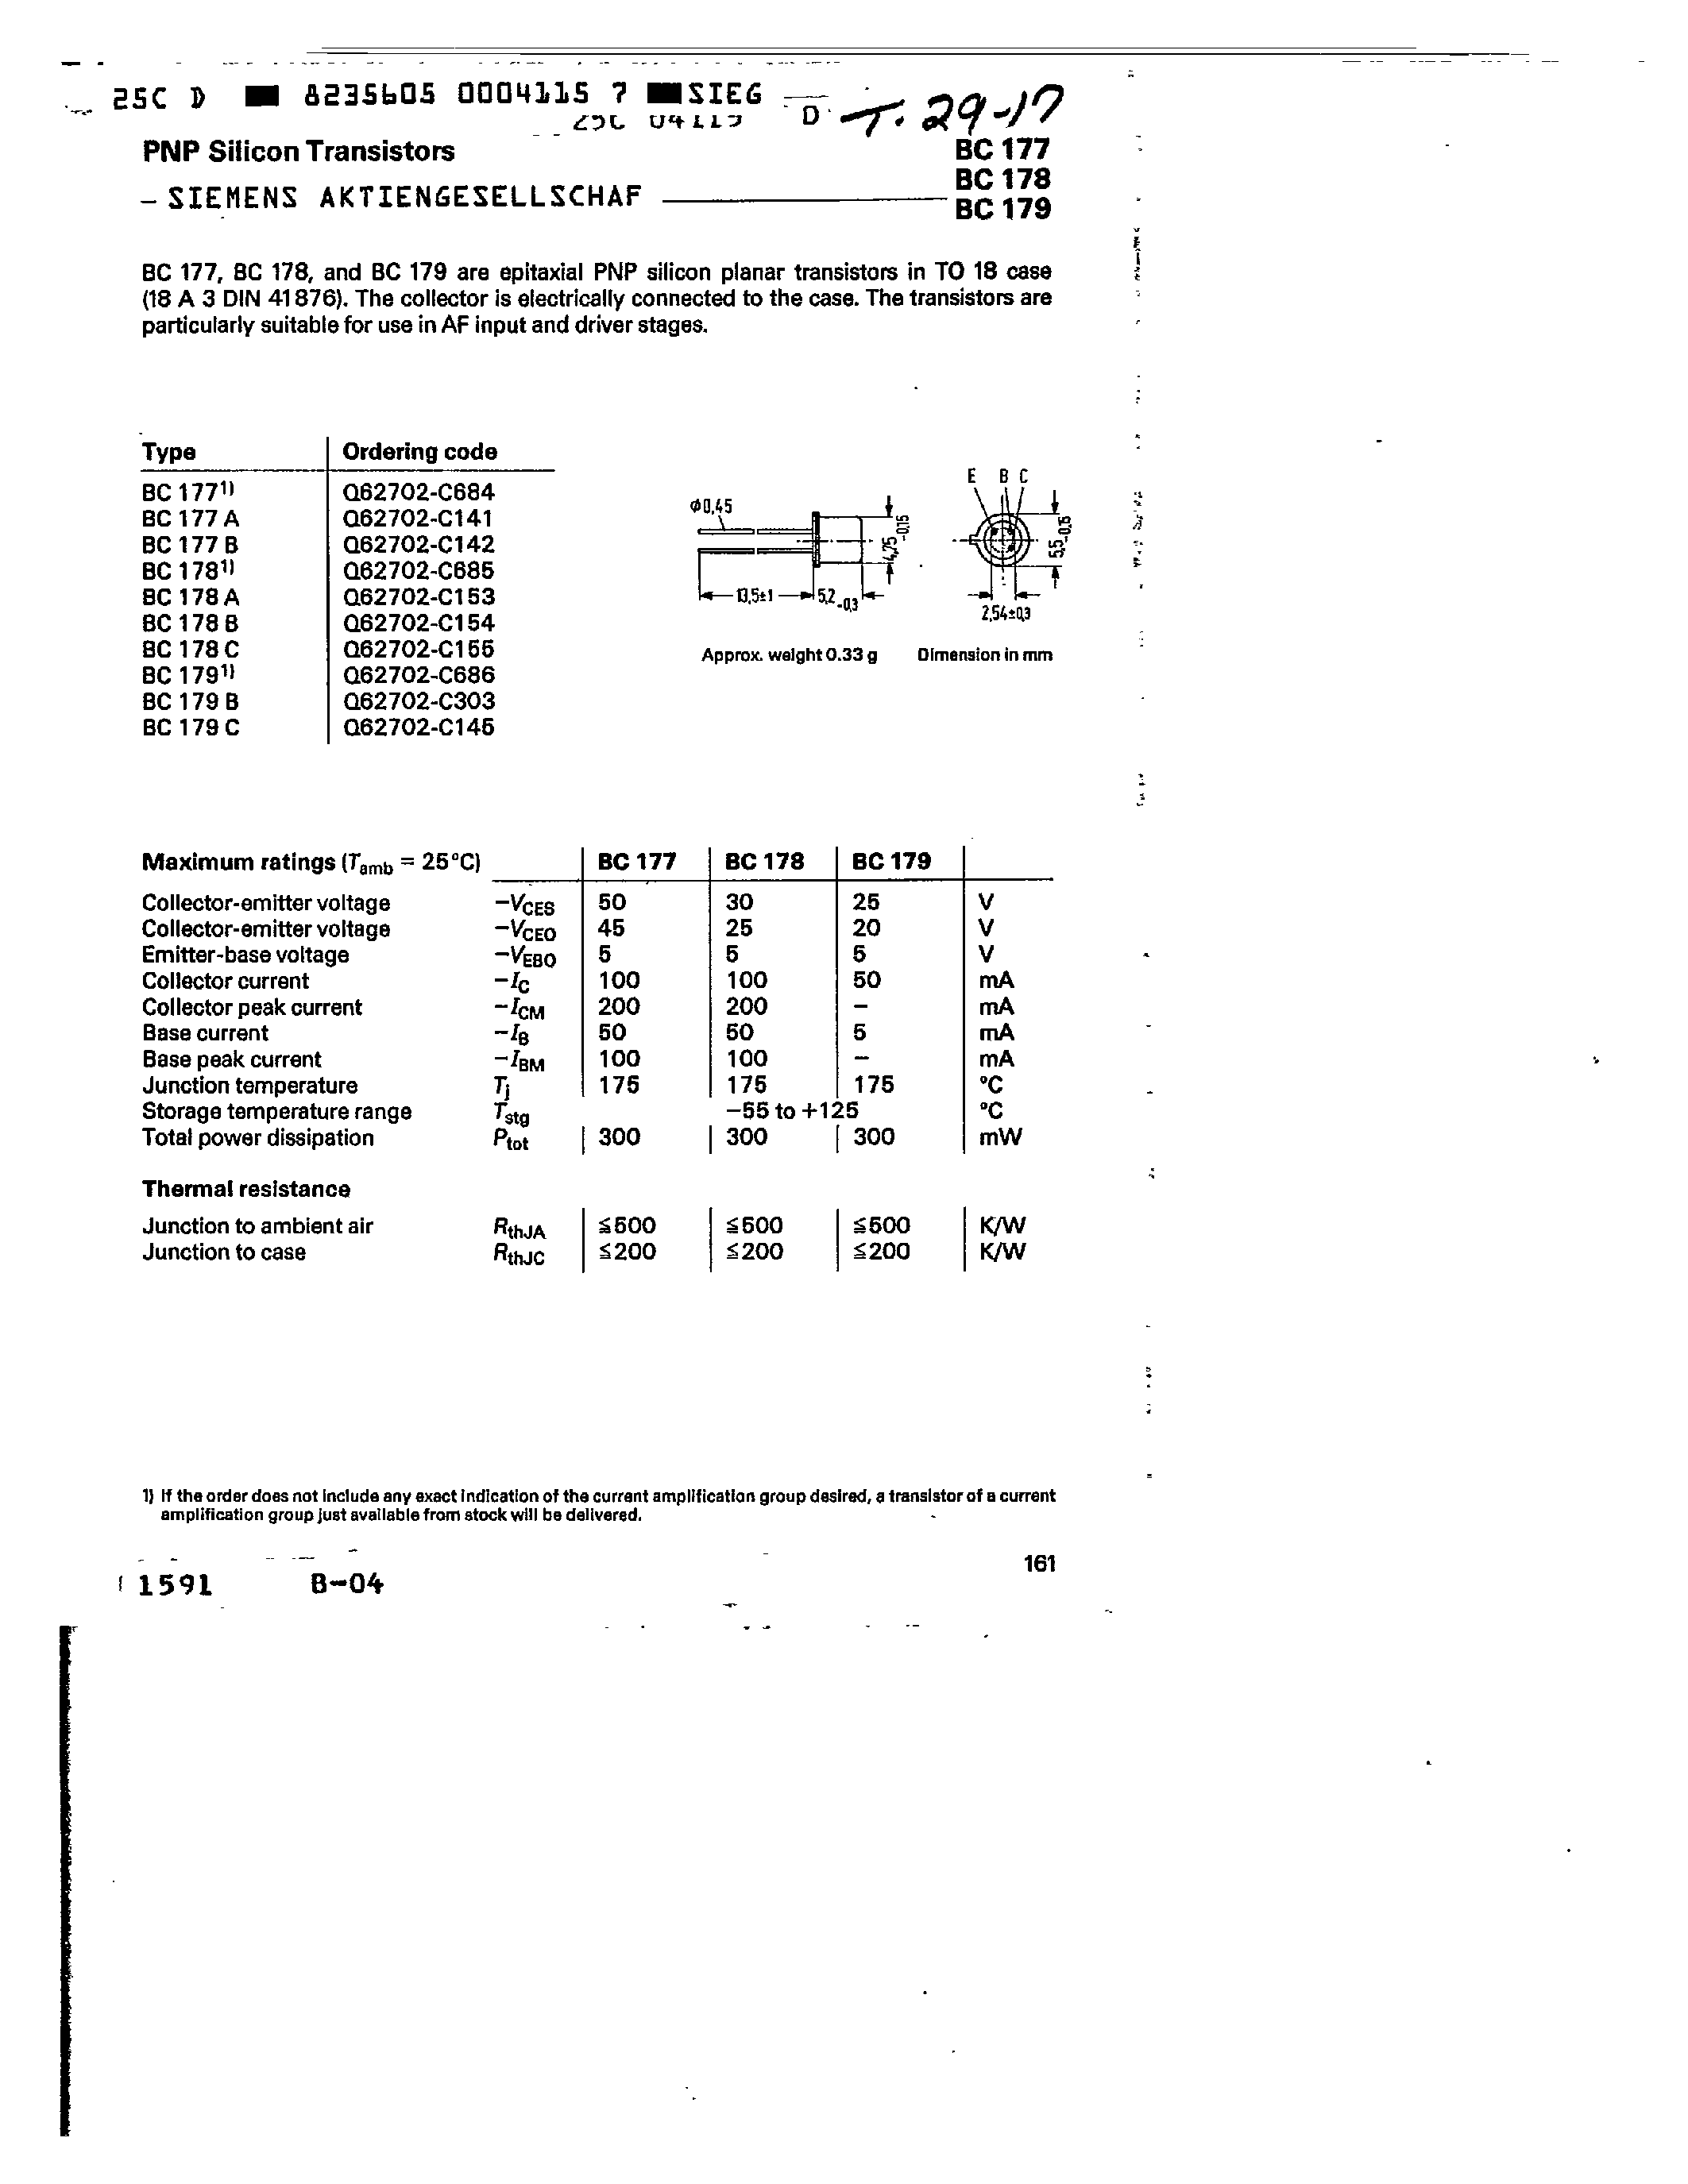 Datasheet BC178B - PNP SILICON TRANSISTORS page 1